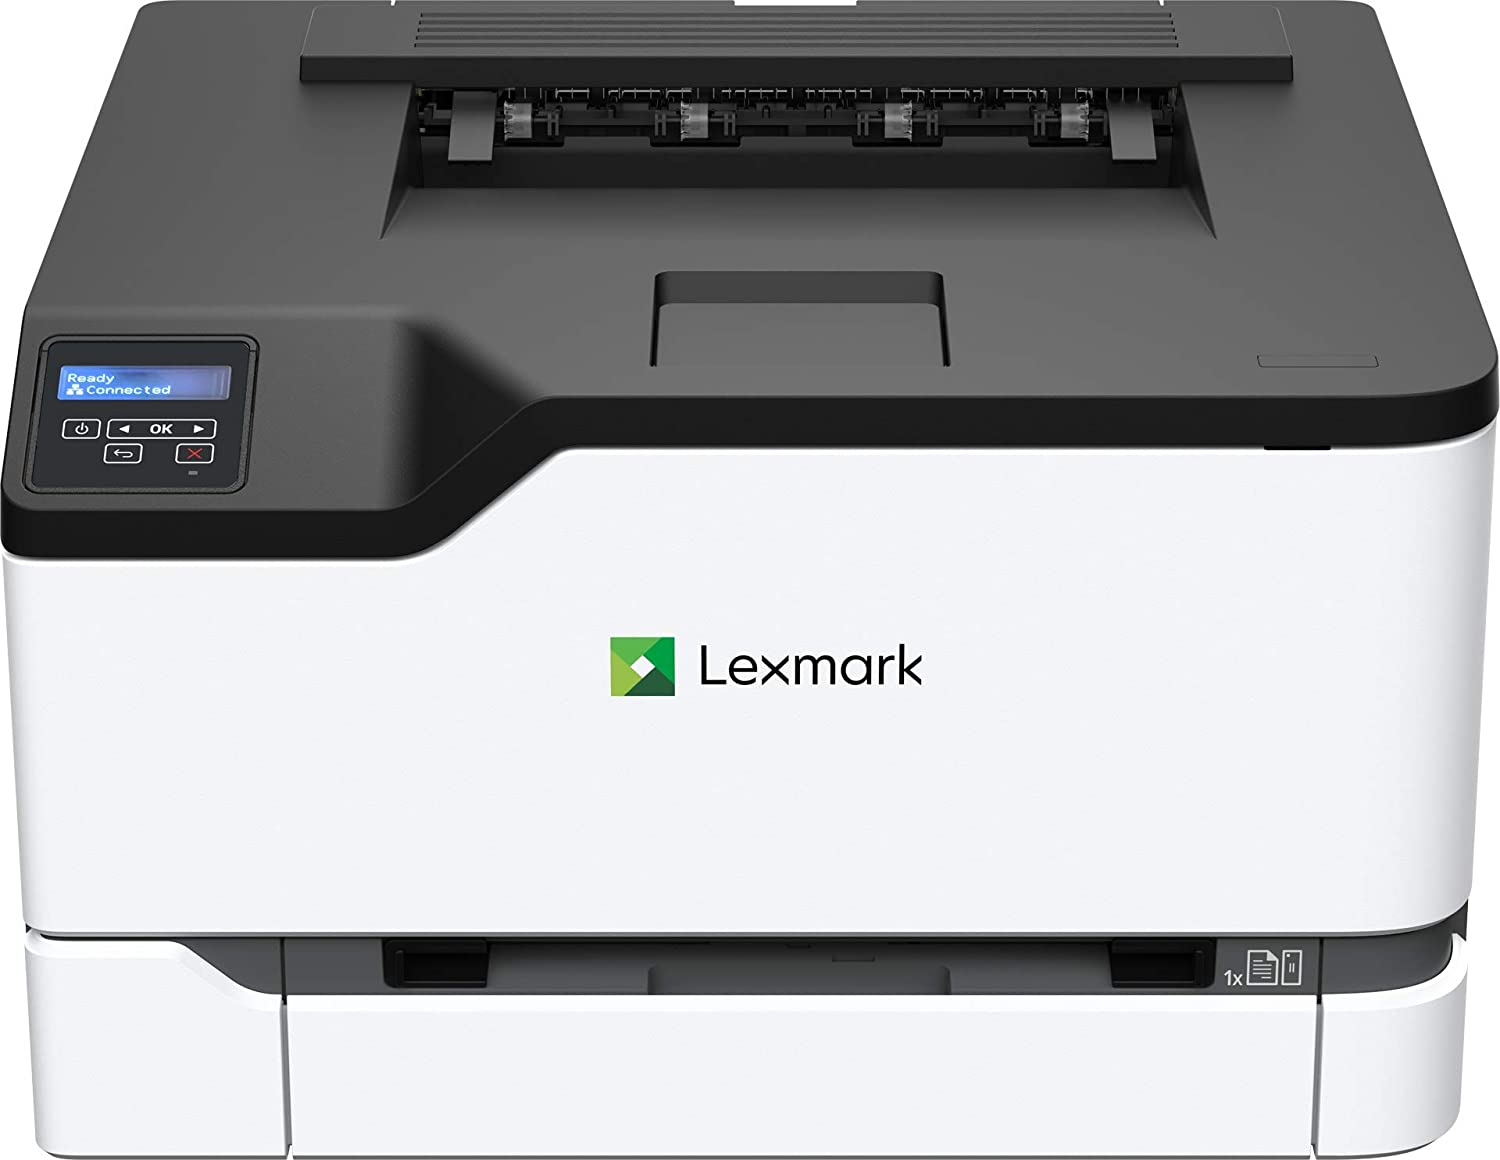 Lexmark 227 Drive Download Mac